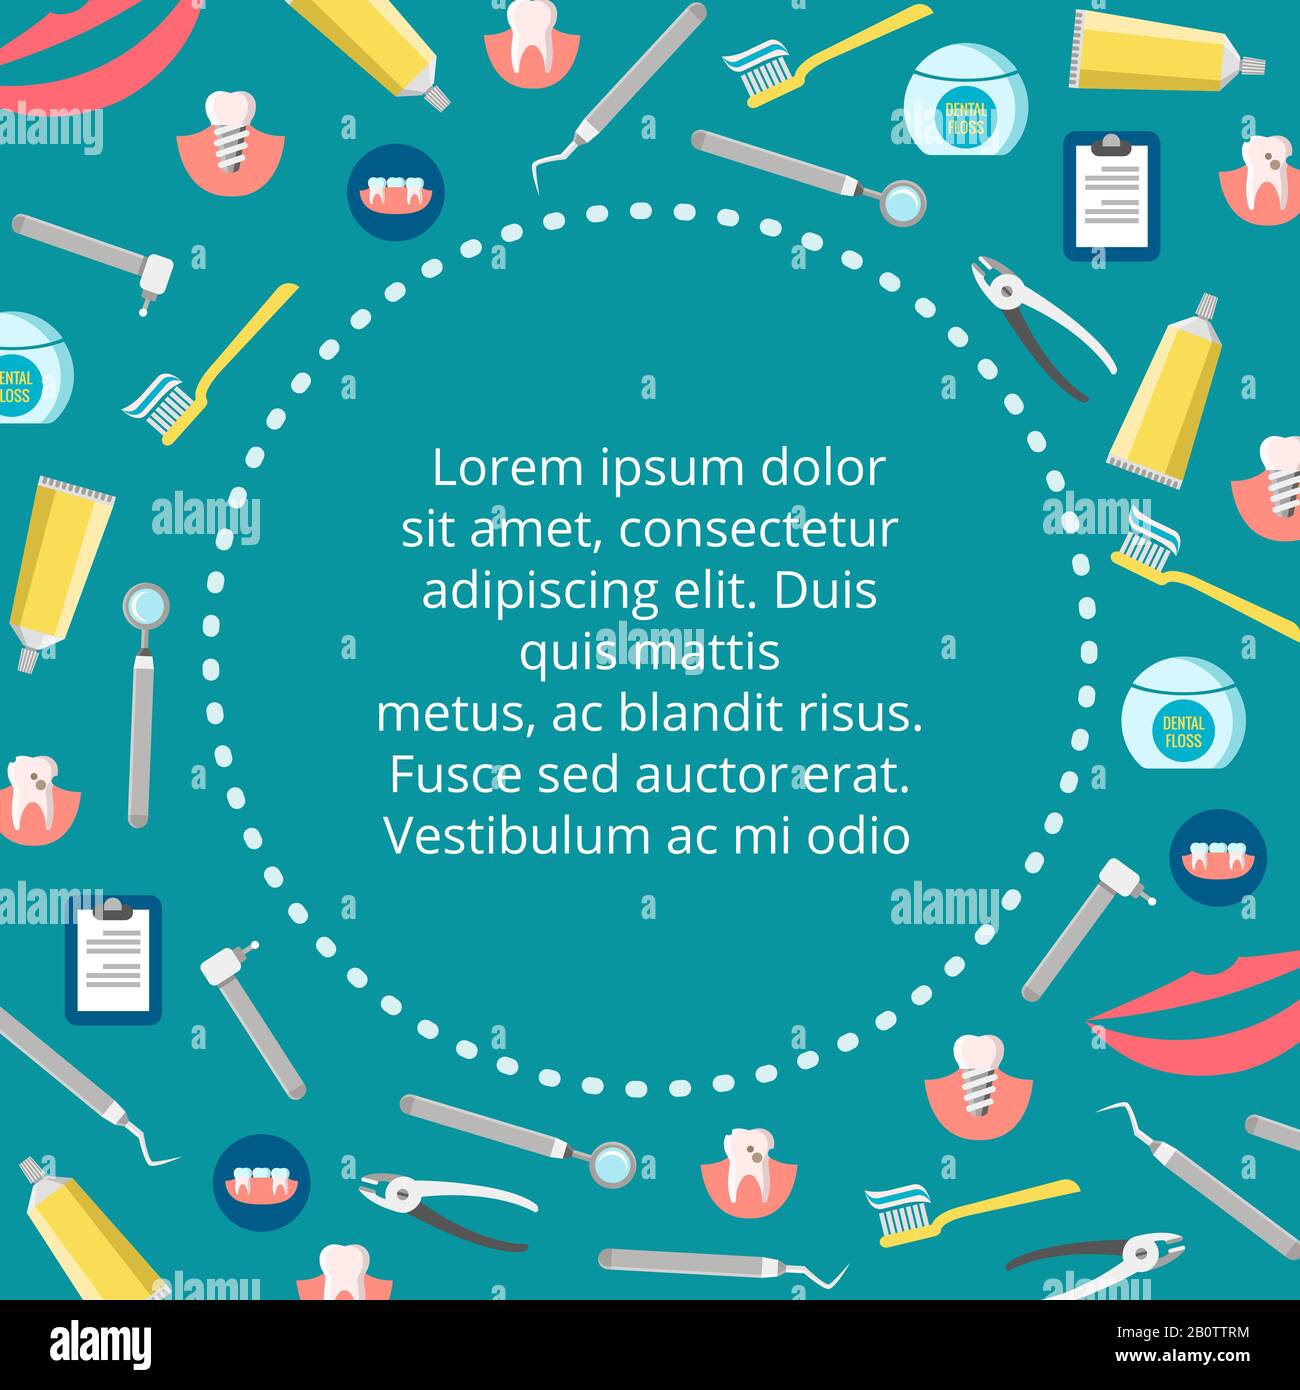 Dental service banner design - colorful stomatology poster. Dentistry health and hygiene, vector illustration Stock Vector